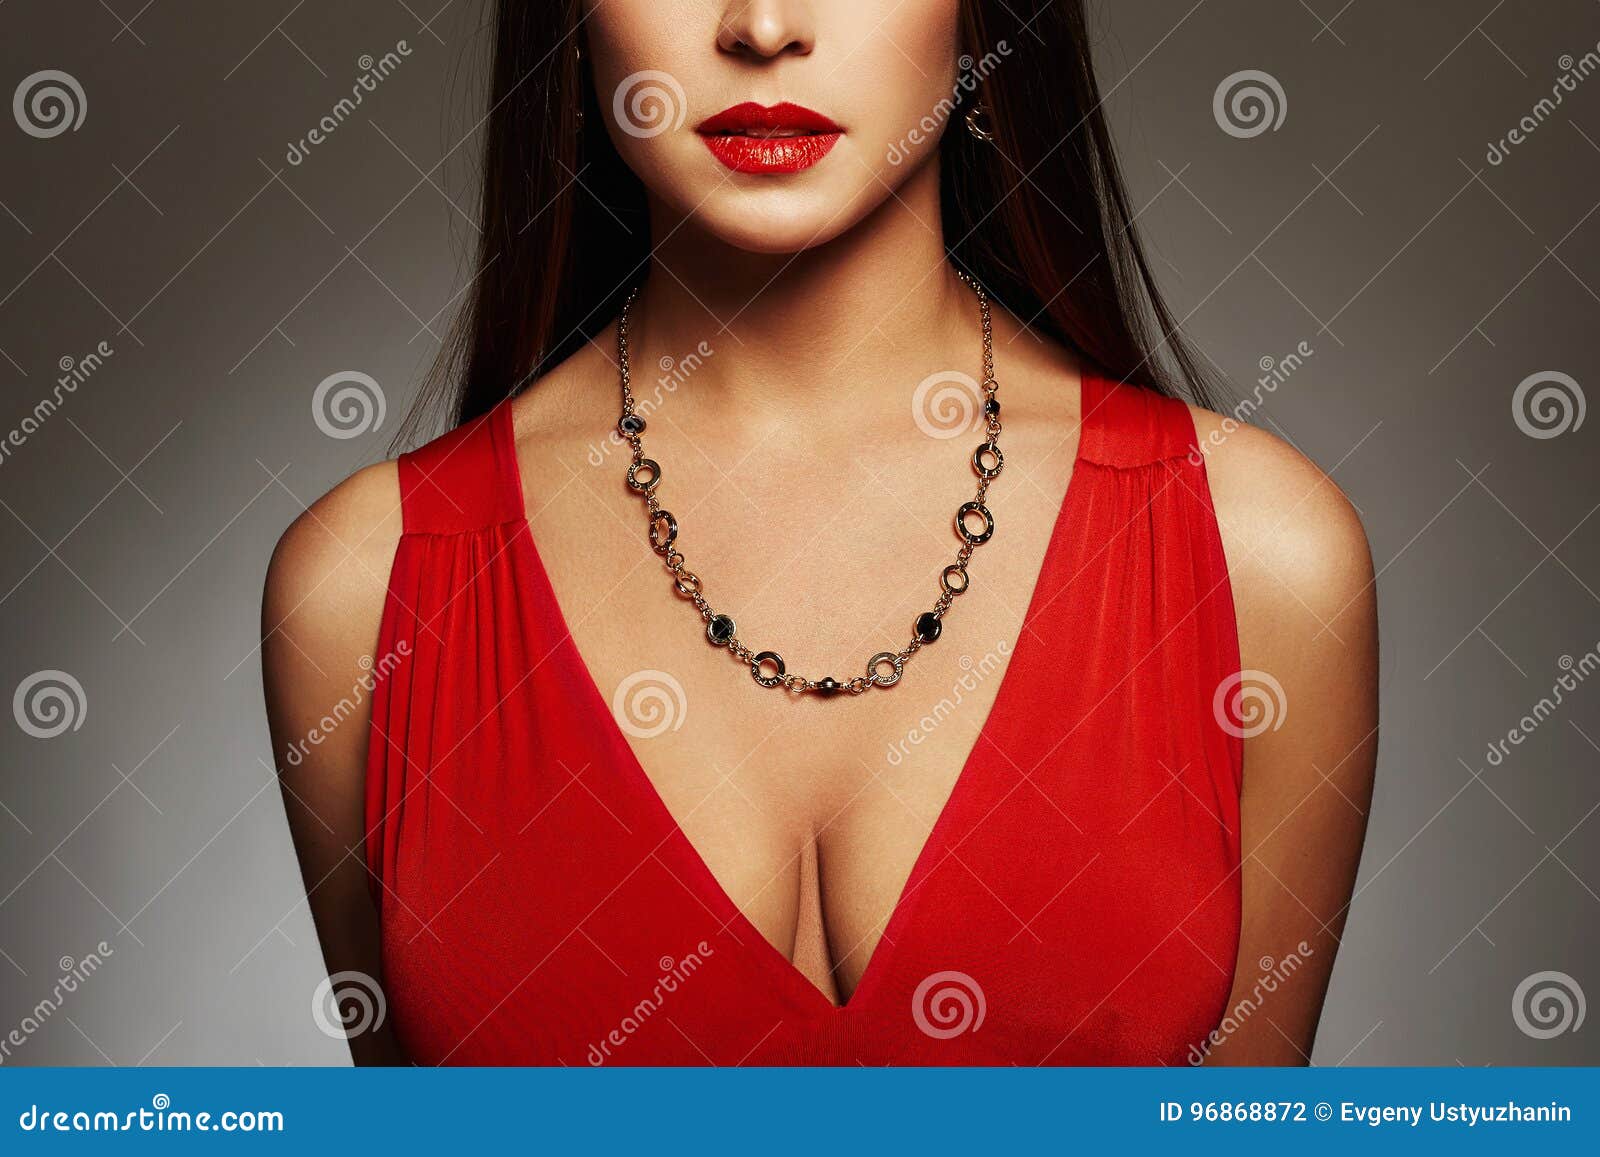 Girl with Big Beautiful Breasts Stock Photo - Image of cosmetics